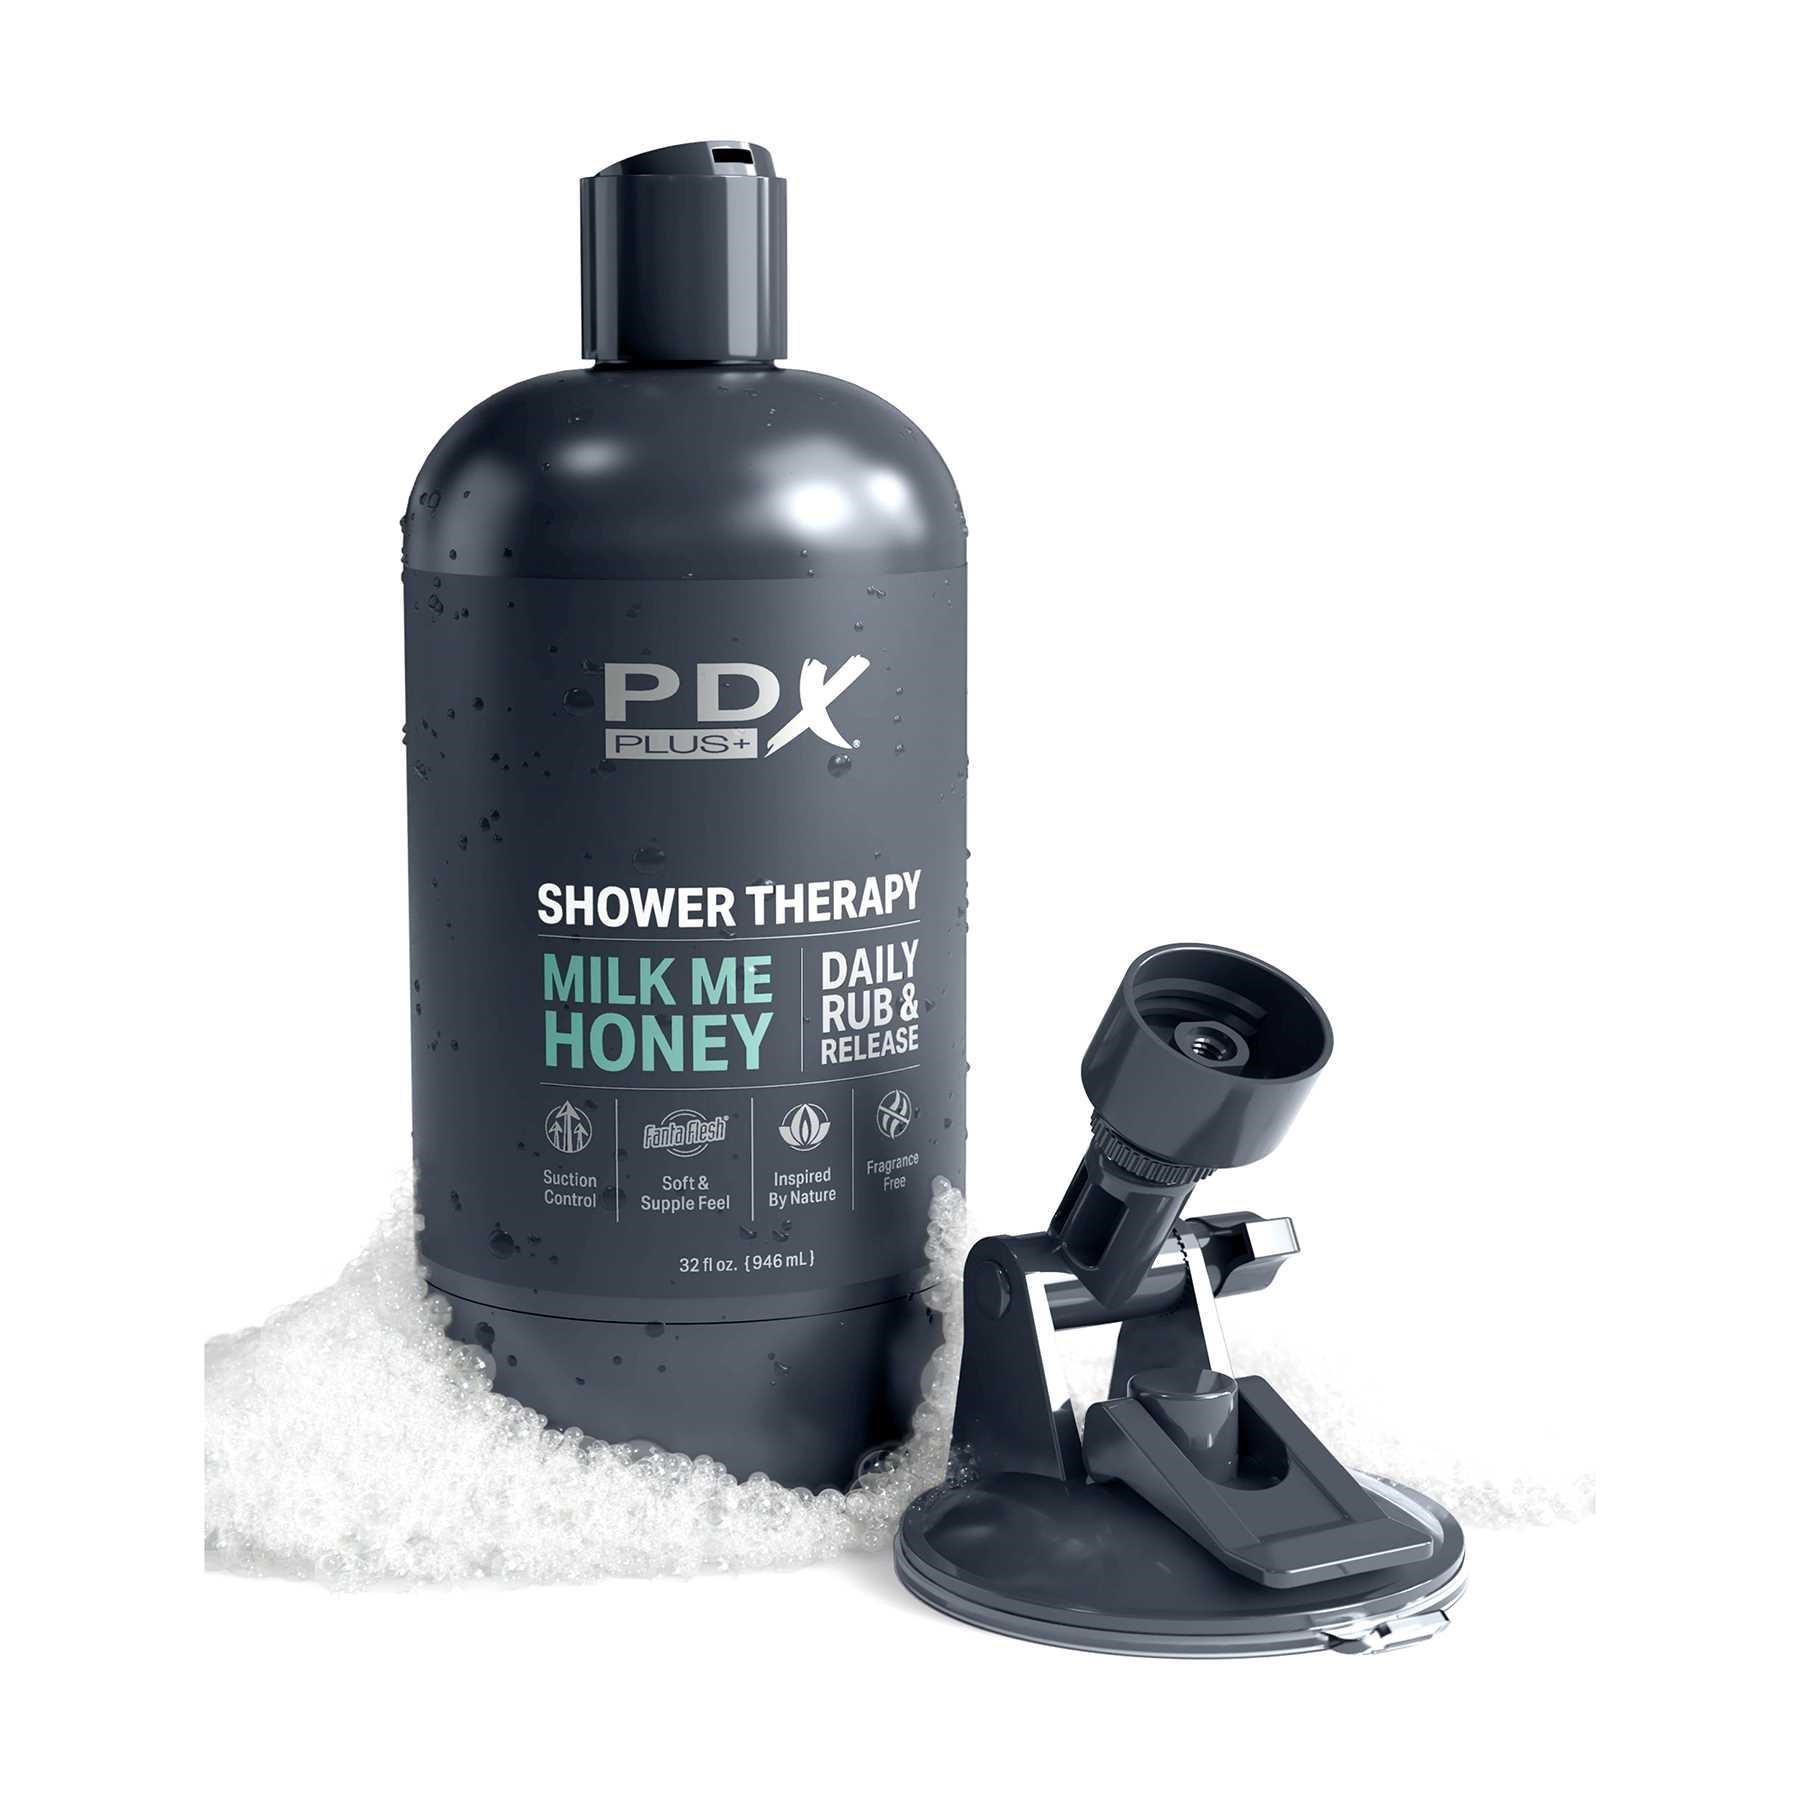 PDX Plus Shower Therapy Milk Me Honey Discreet Stroker white next to mount